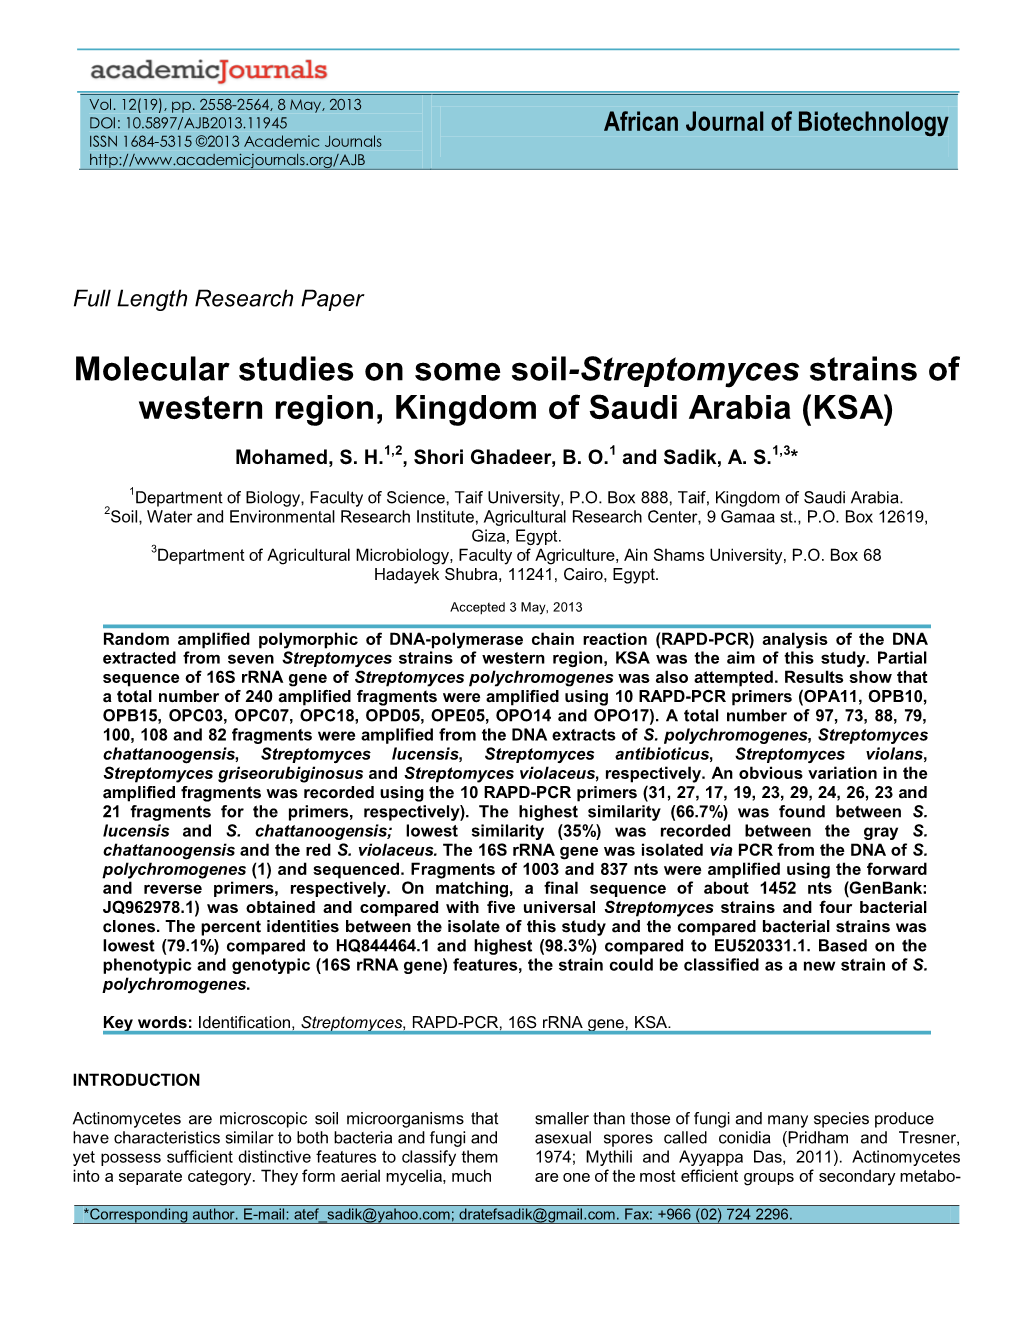 Molecular Studies on Some Soil-Streptomyces Strains of Western Region, Kingdom of Saudi Arabia (KSA)